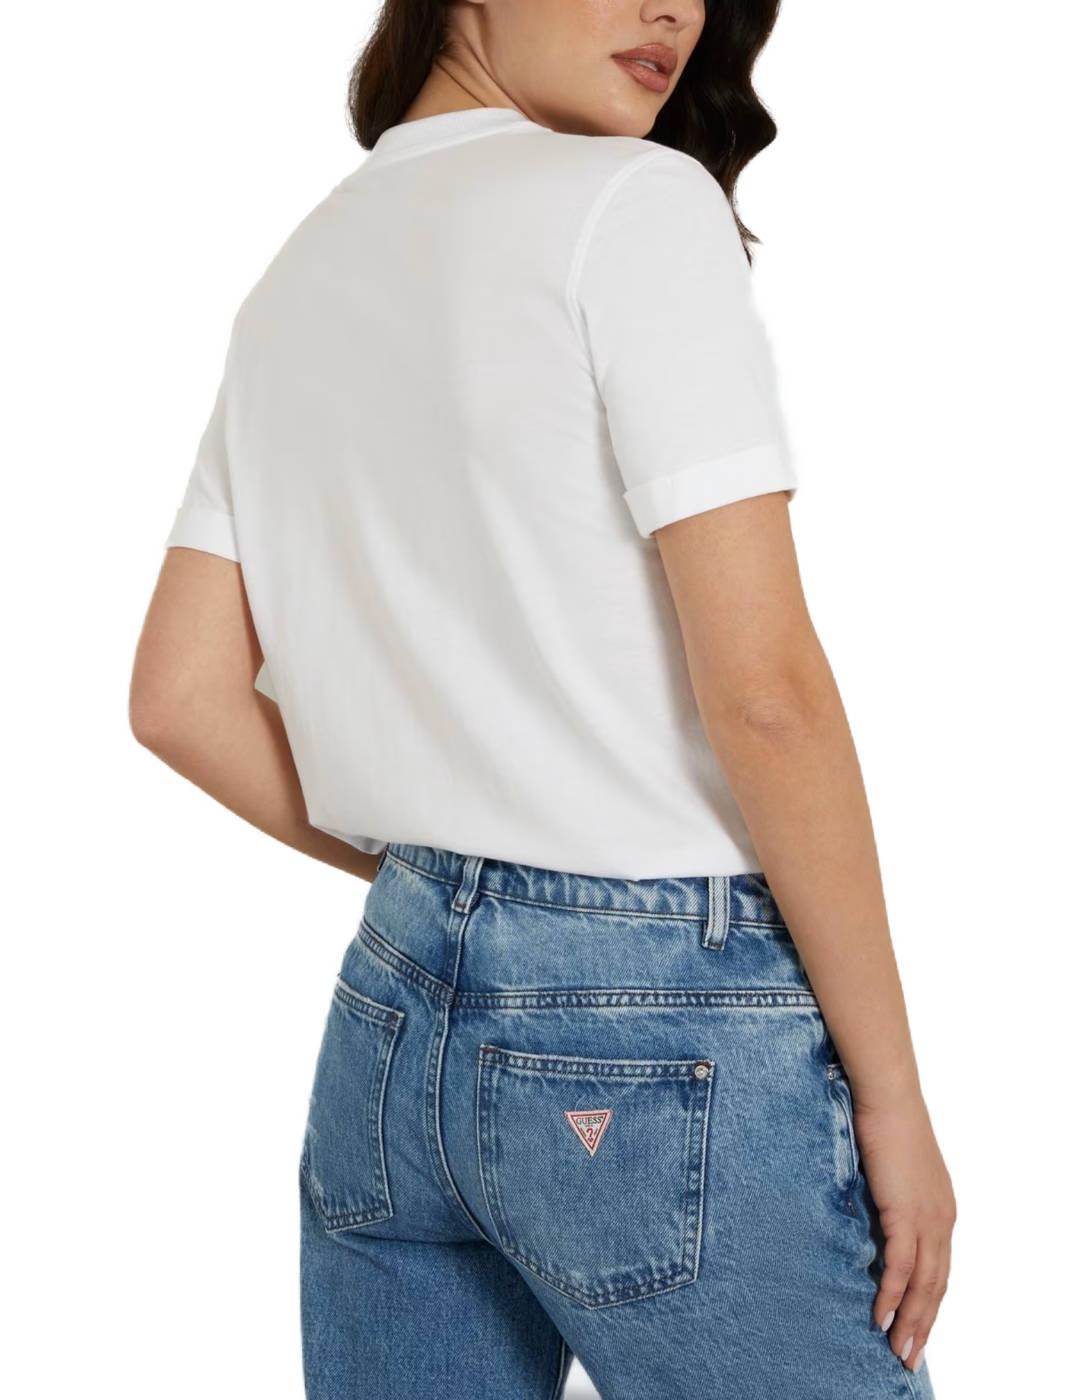 Camiseta Guess Beach triangle blanco manga corta para mujer